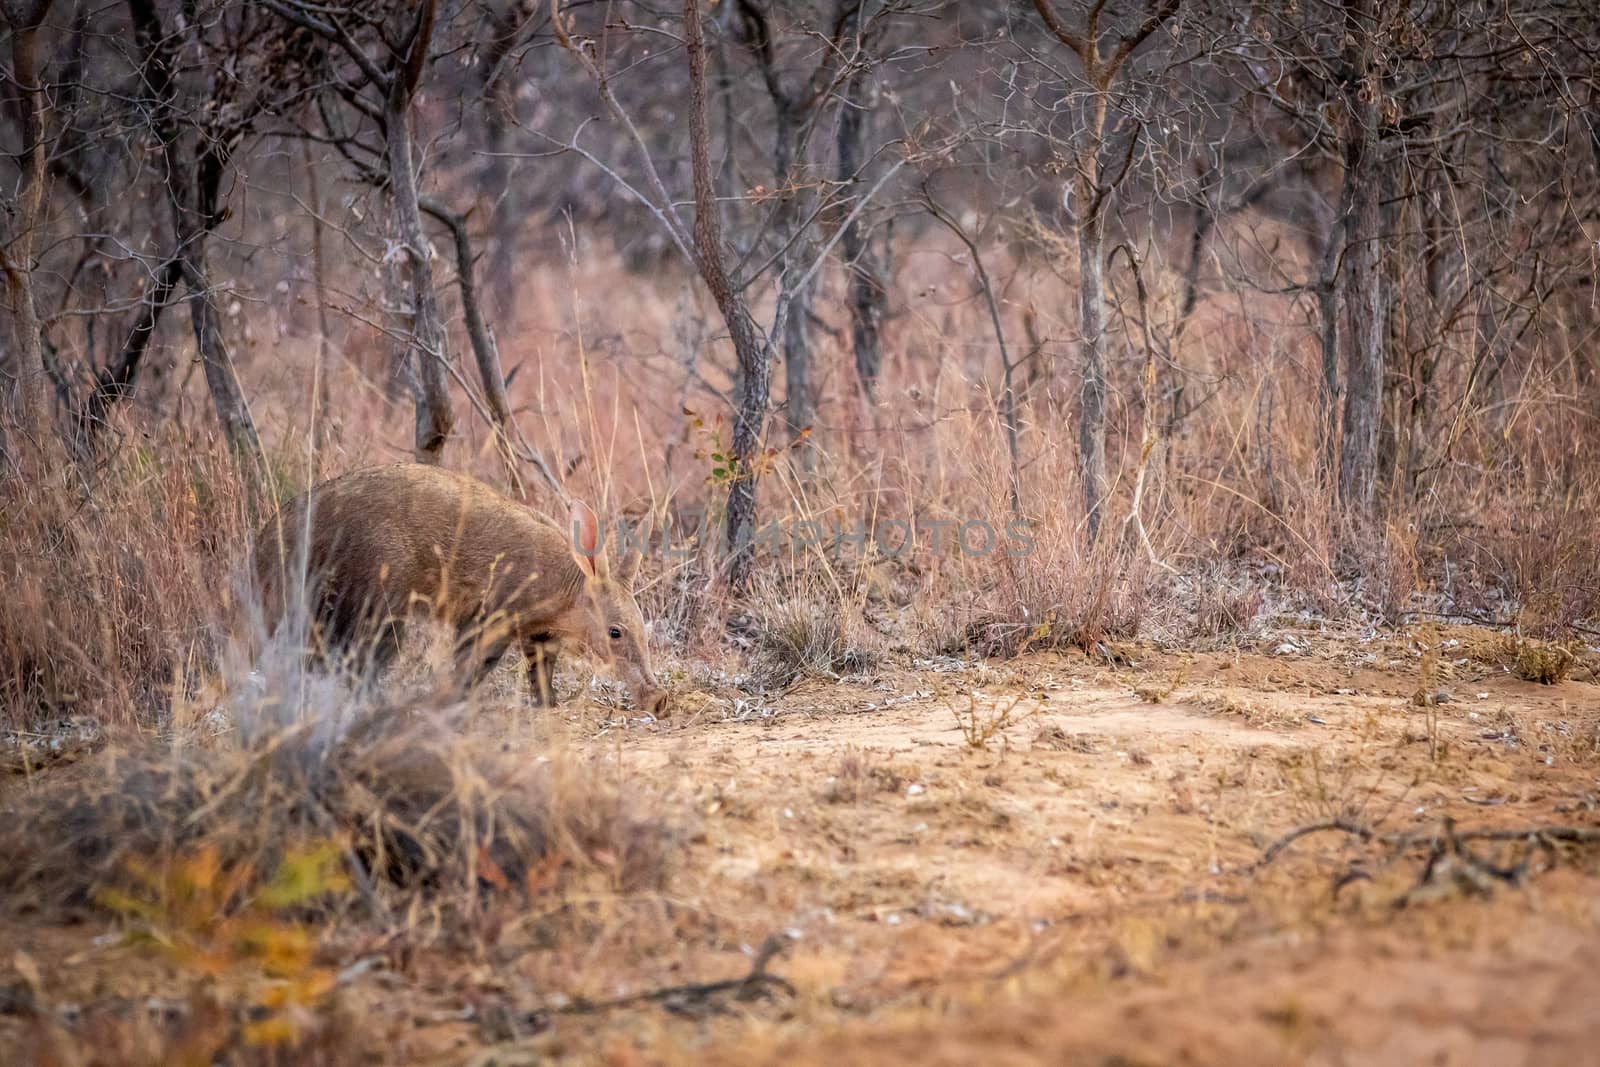 Aardvark walking in the bush in the Welgevonden game reserve, South Africa.